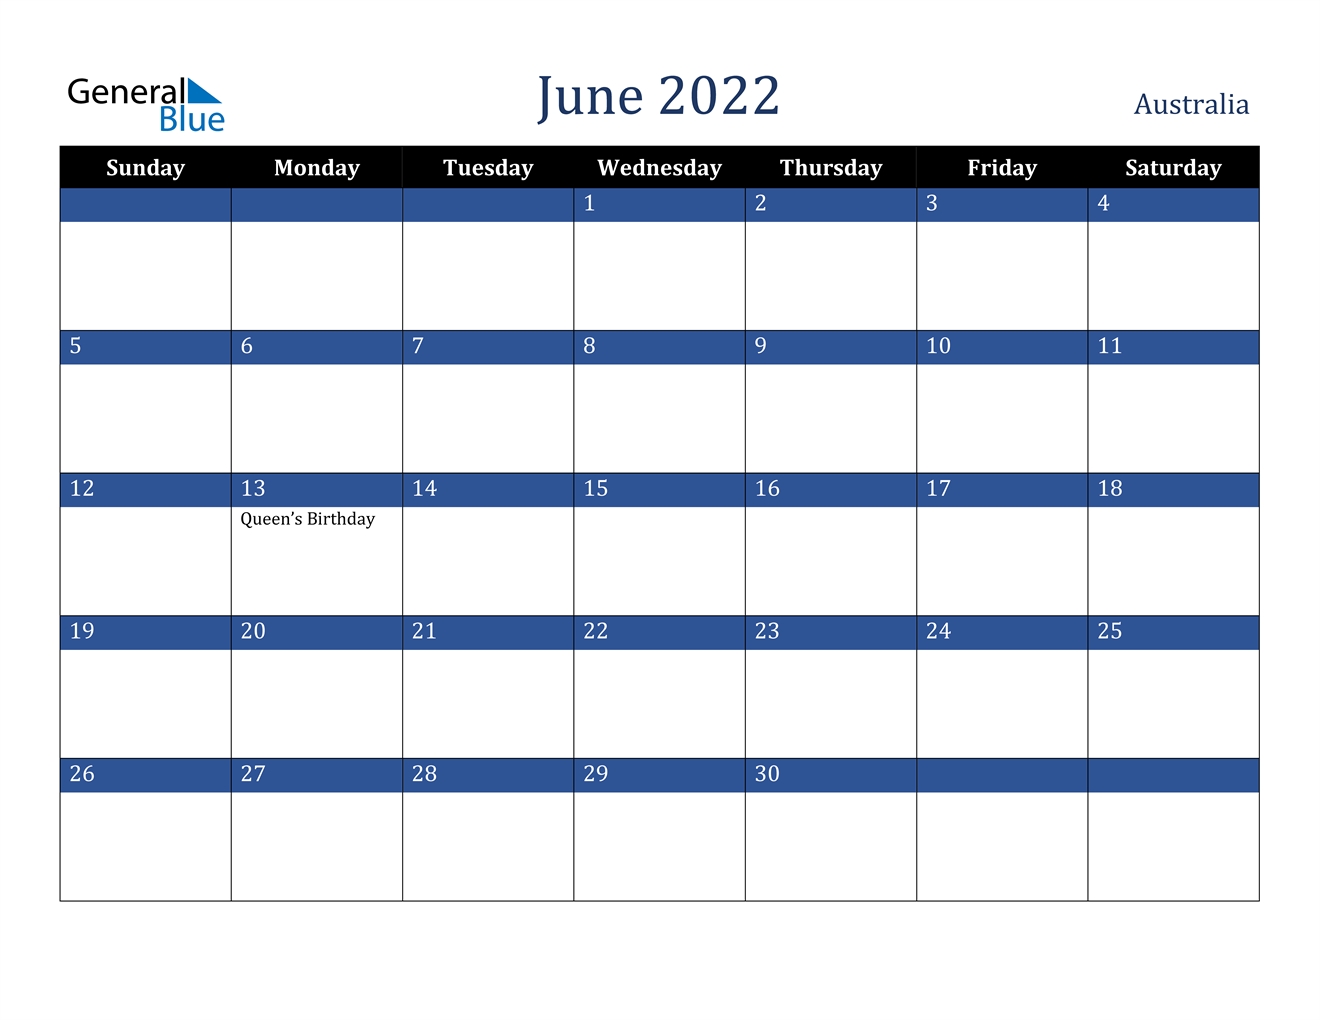 June 2022 Calendar - Australia